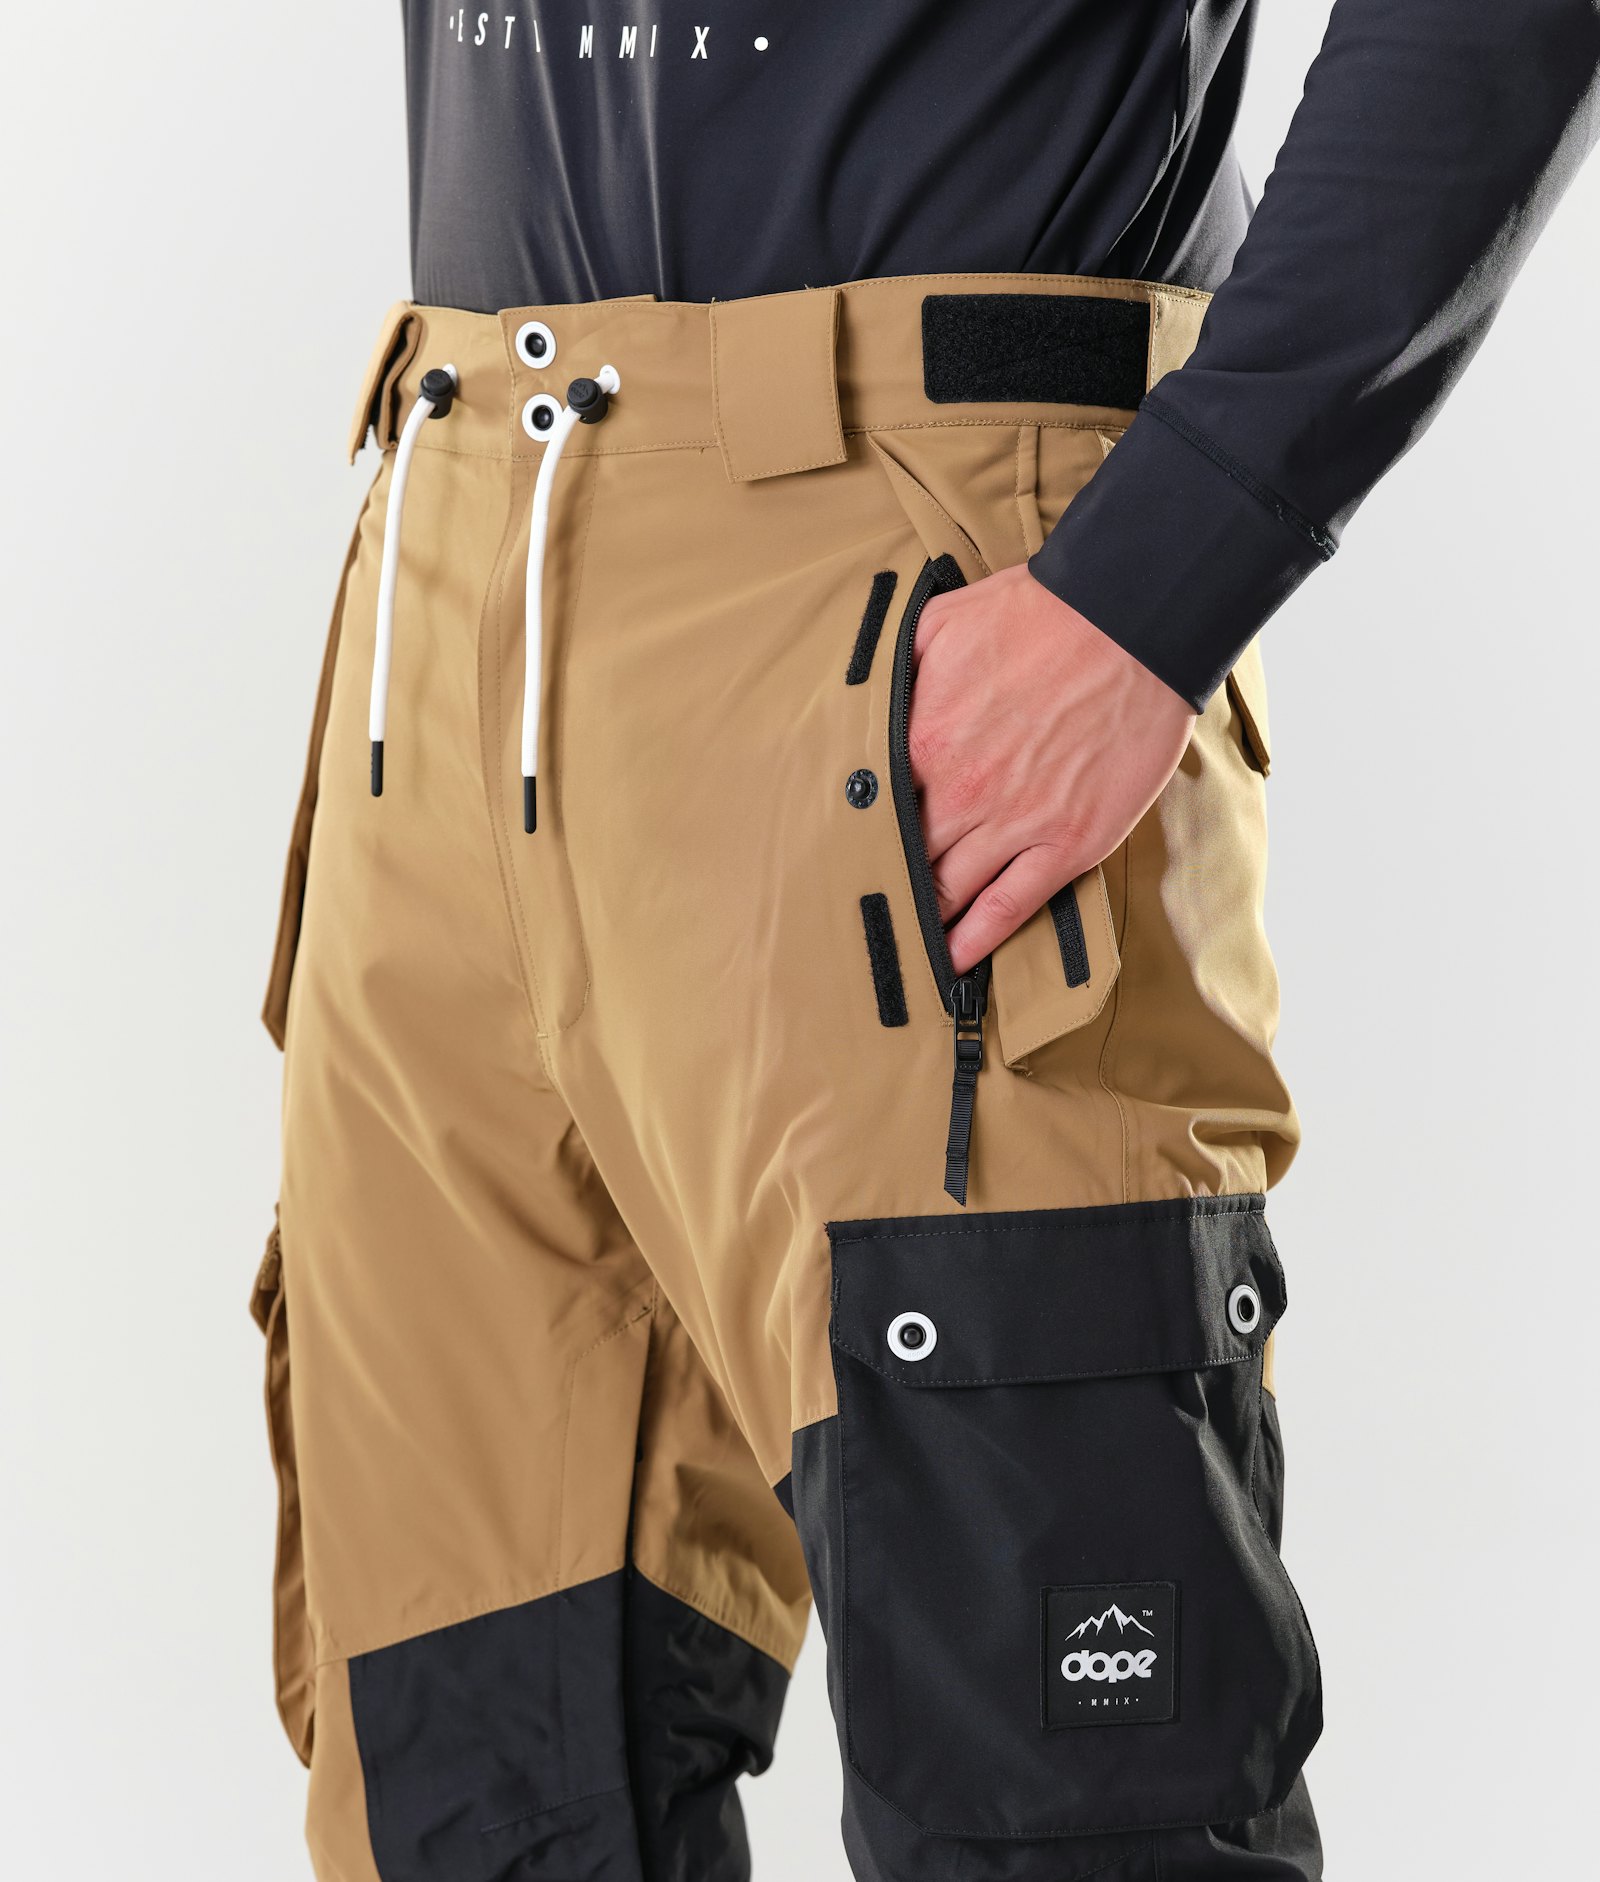 Adept 2020 Snowboard Pants Men Gold/Black